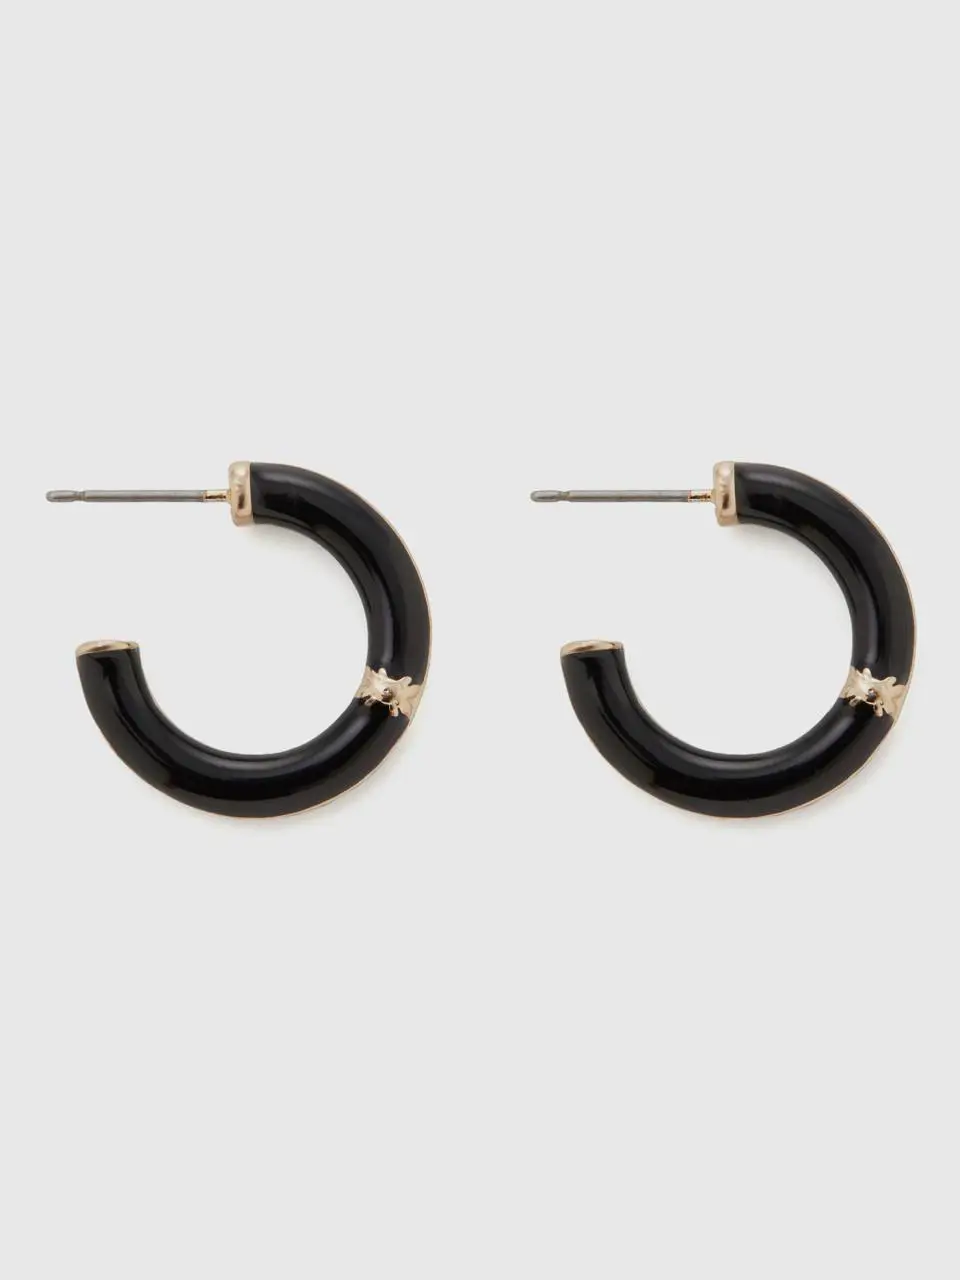 Benetton black c hoop earrings. 1